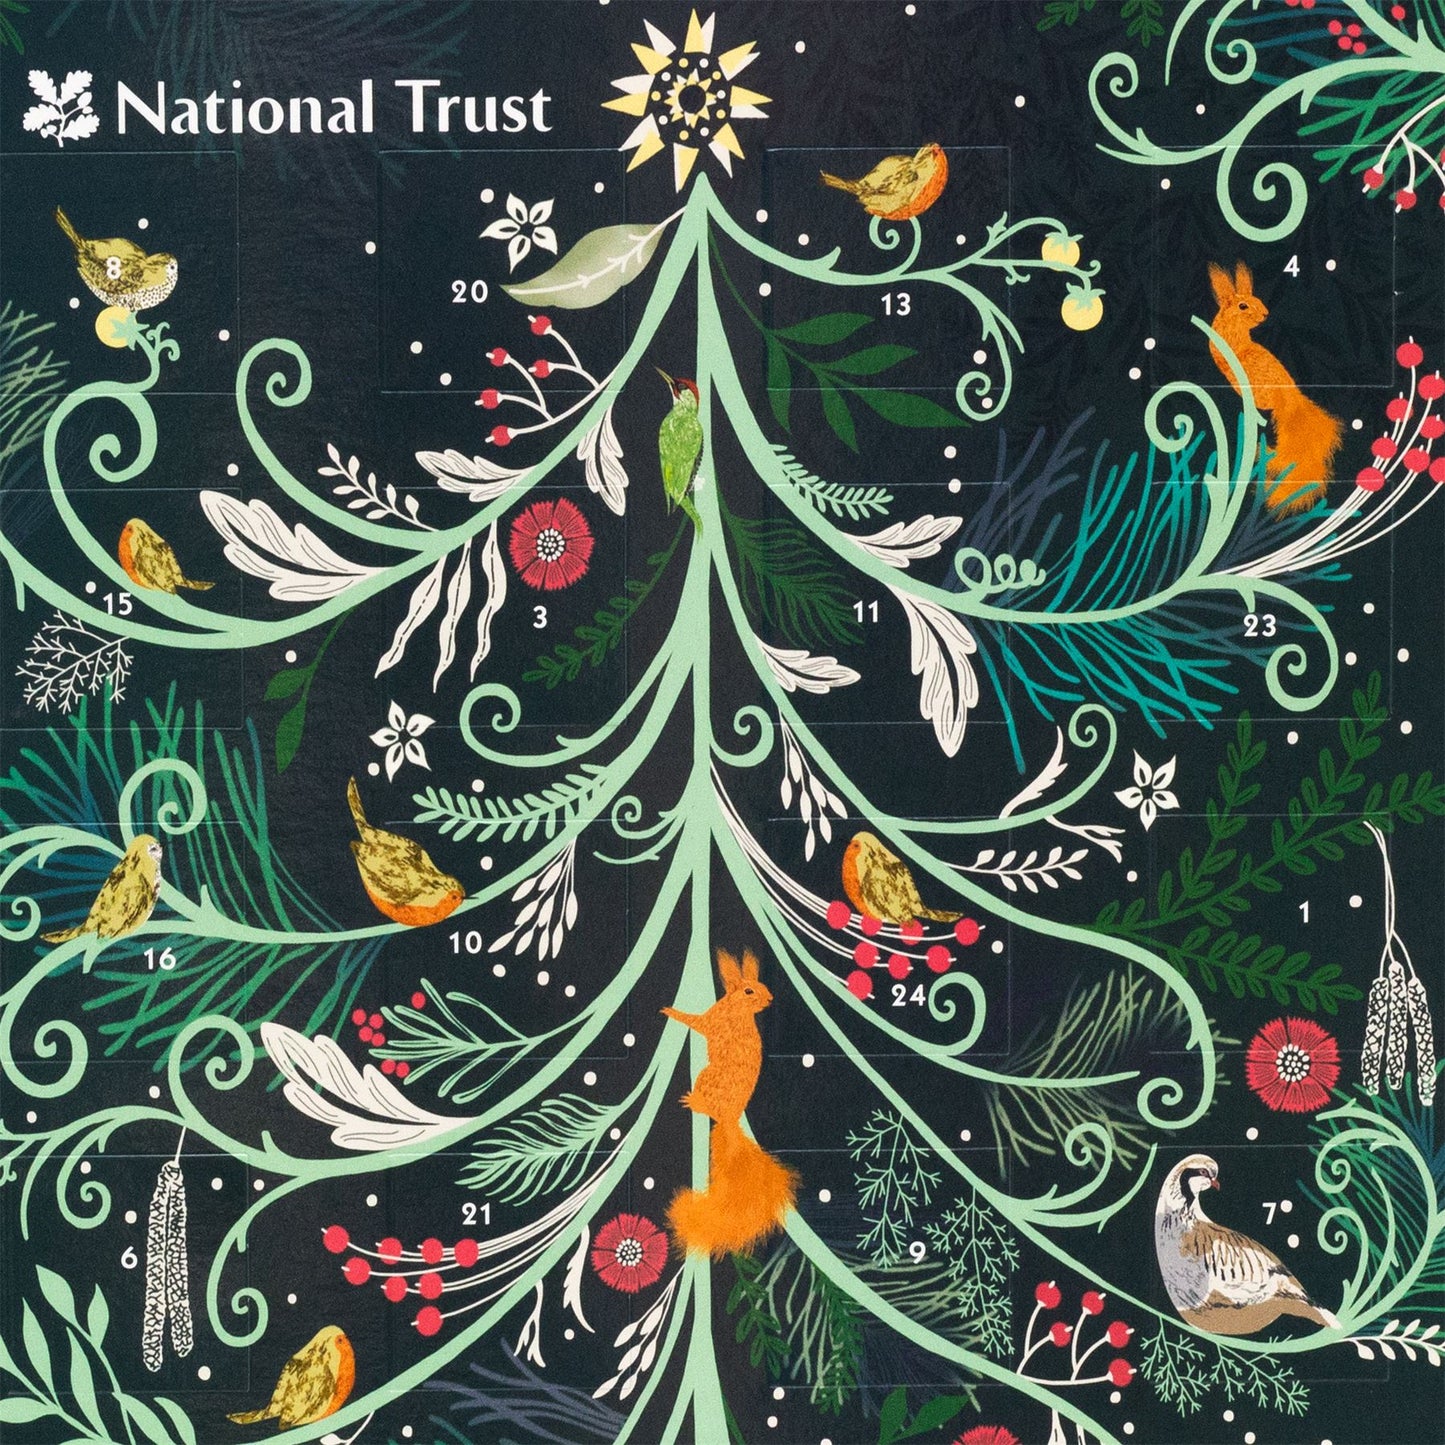 National Trust Christmas Advent Calendar | Flora & Fauna Picture Advent Calendar